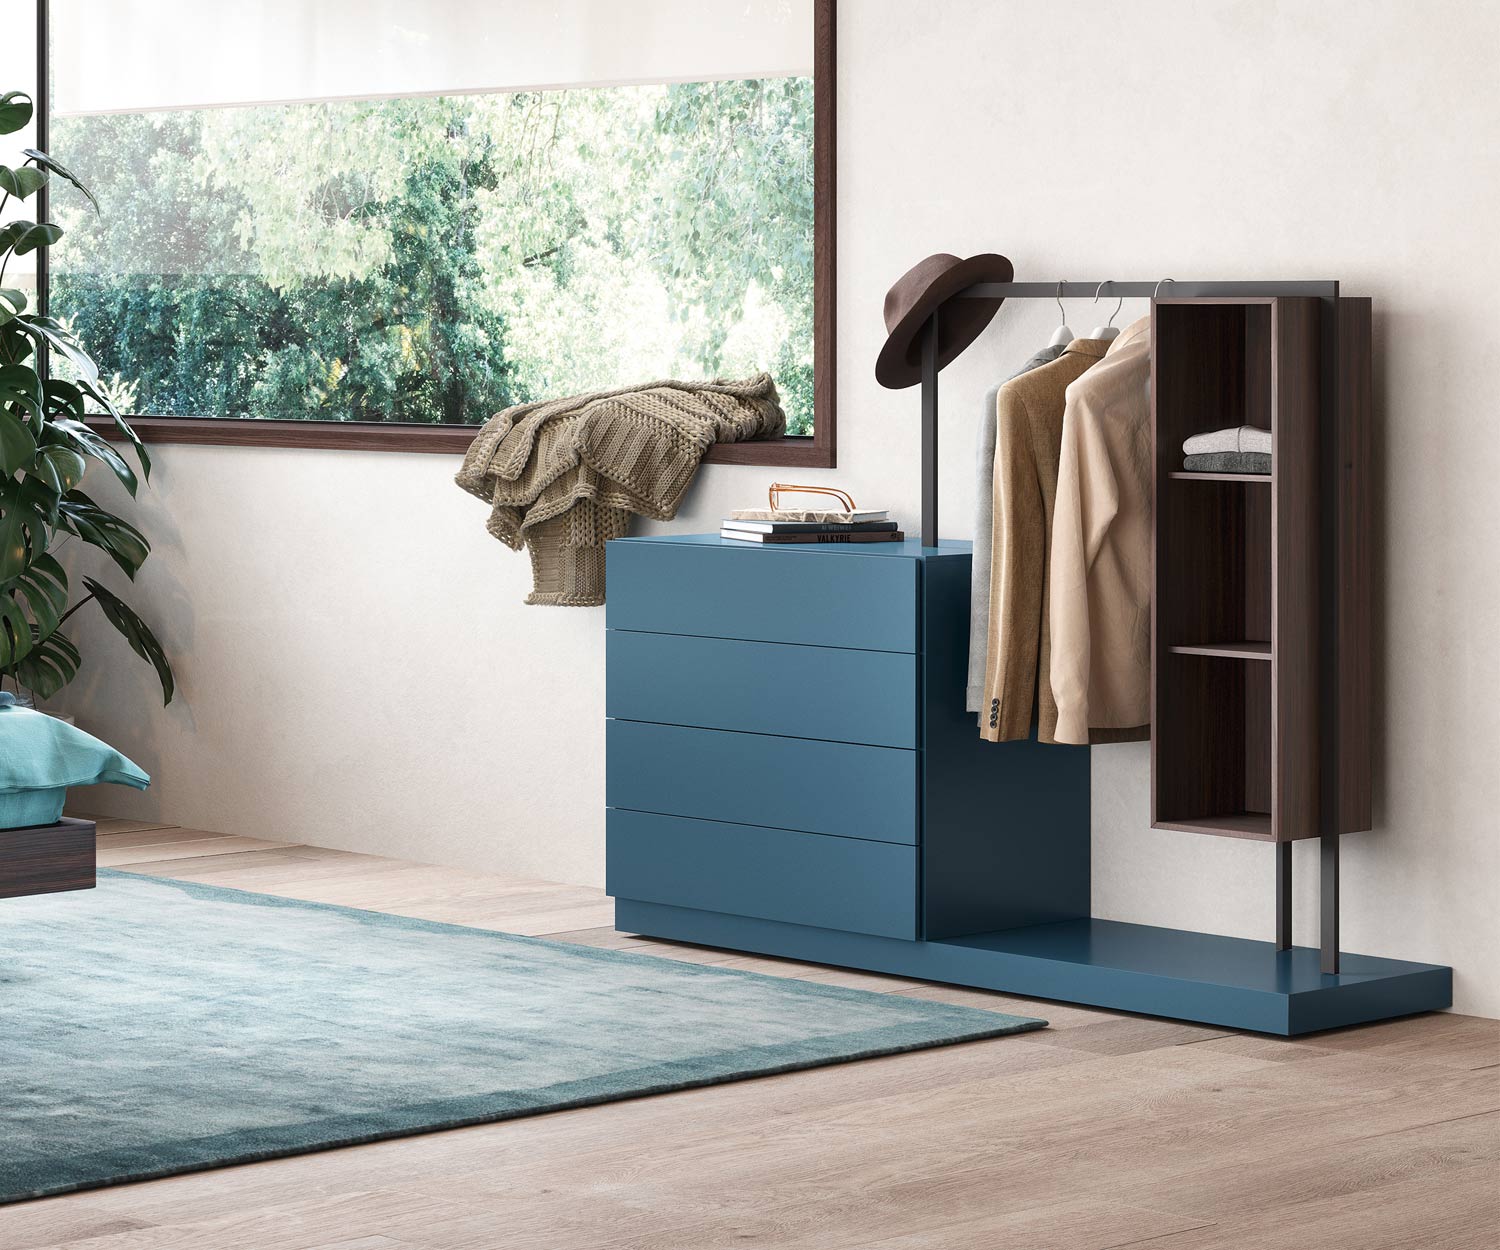 Novamobili Design Kommode Easy 4 mit Garderobe und offenem Element